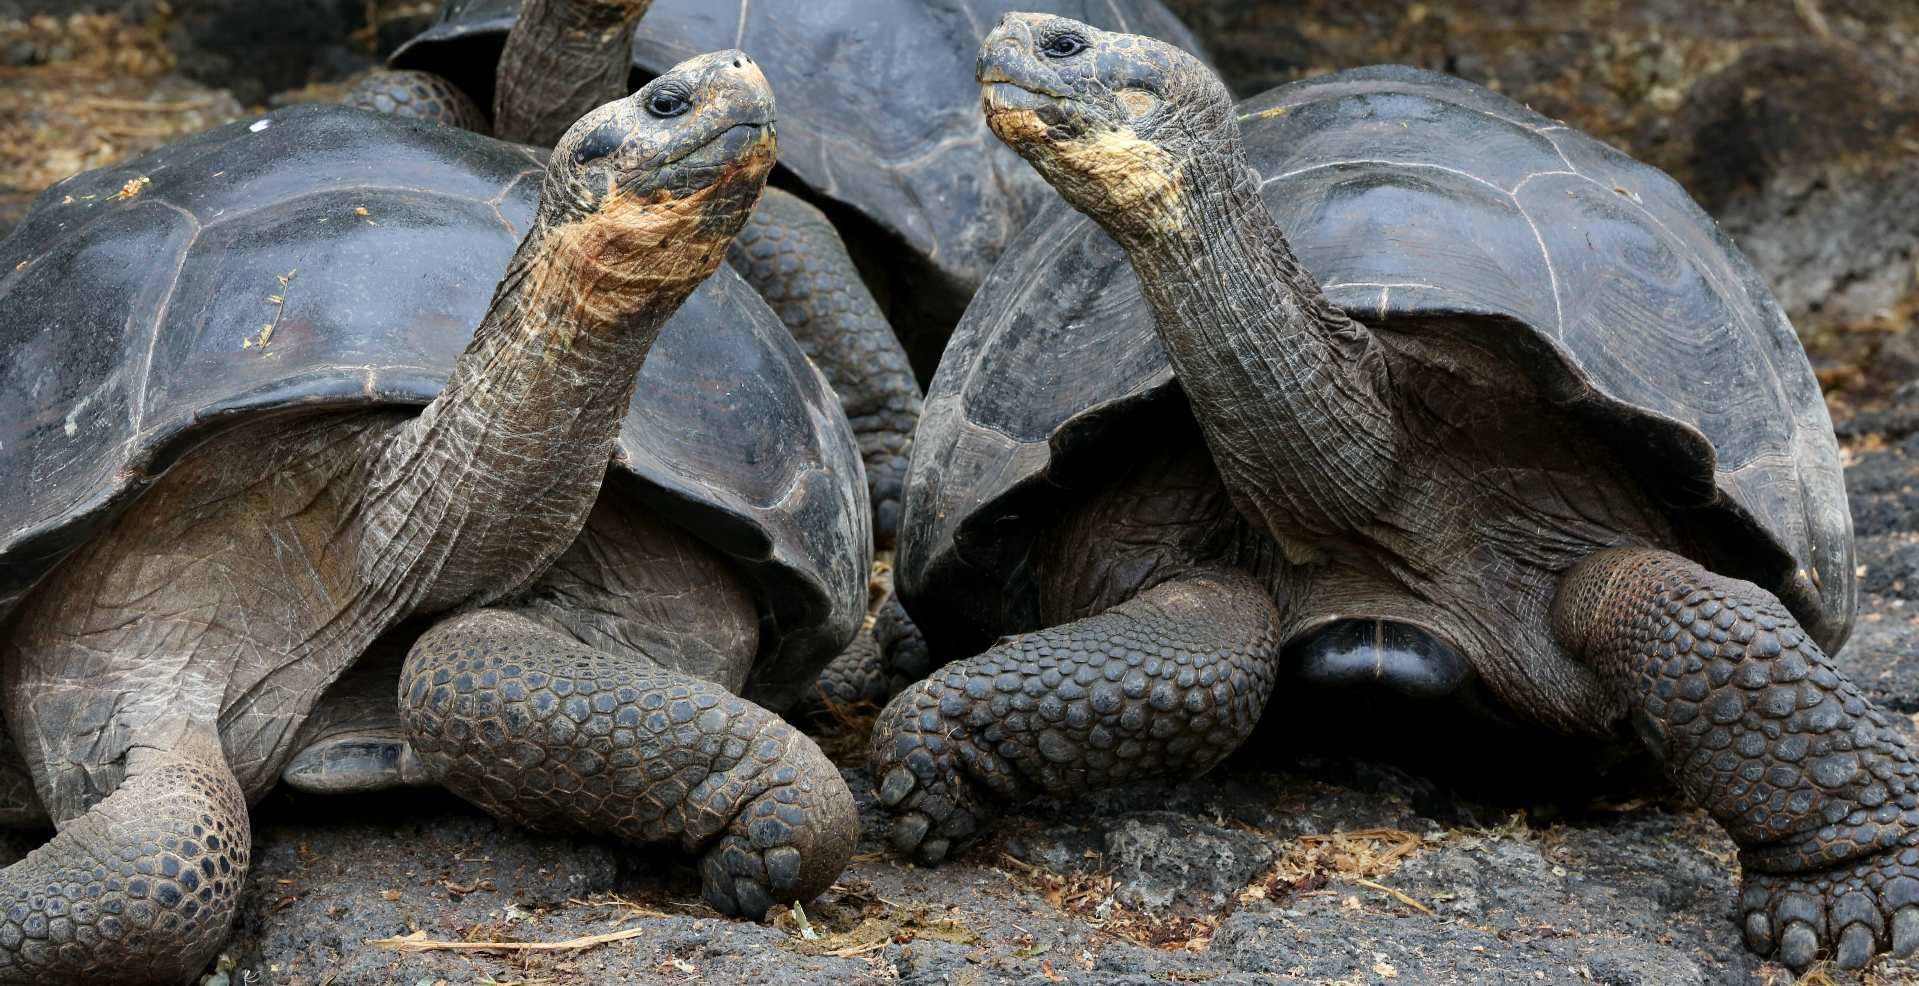 Giant tortoises hate Donald Trump's policies